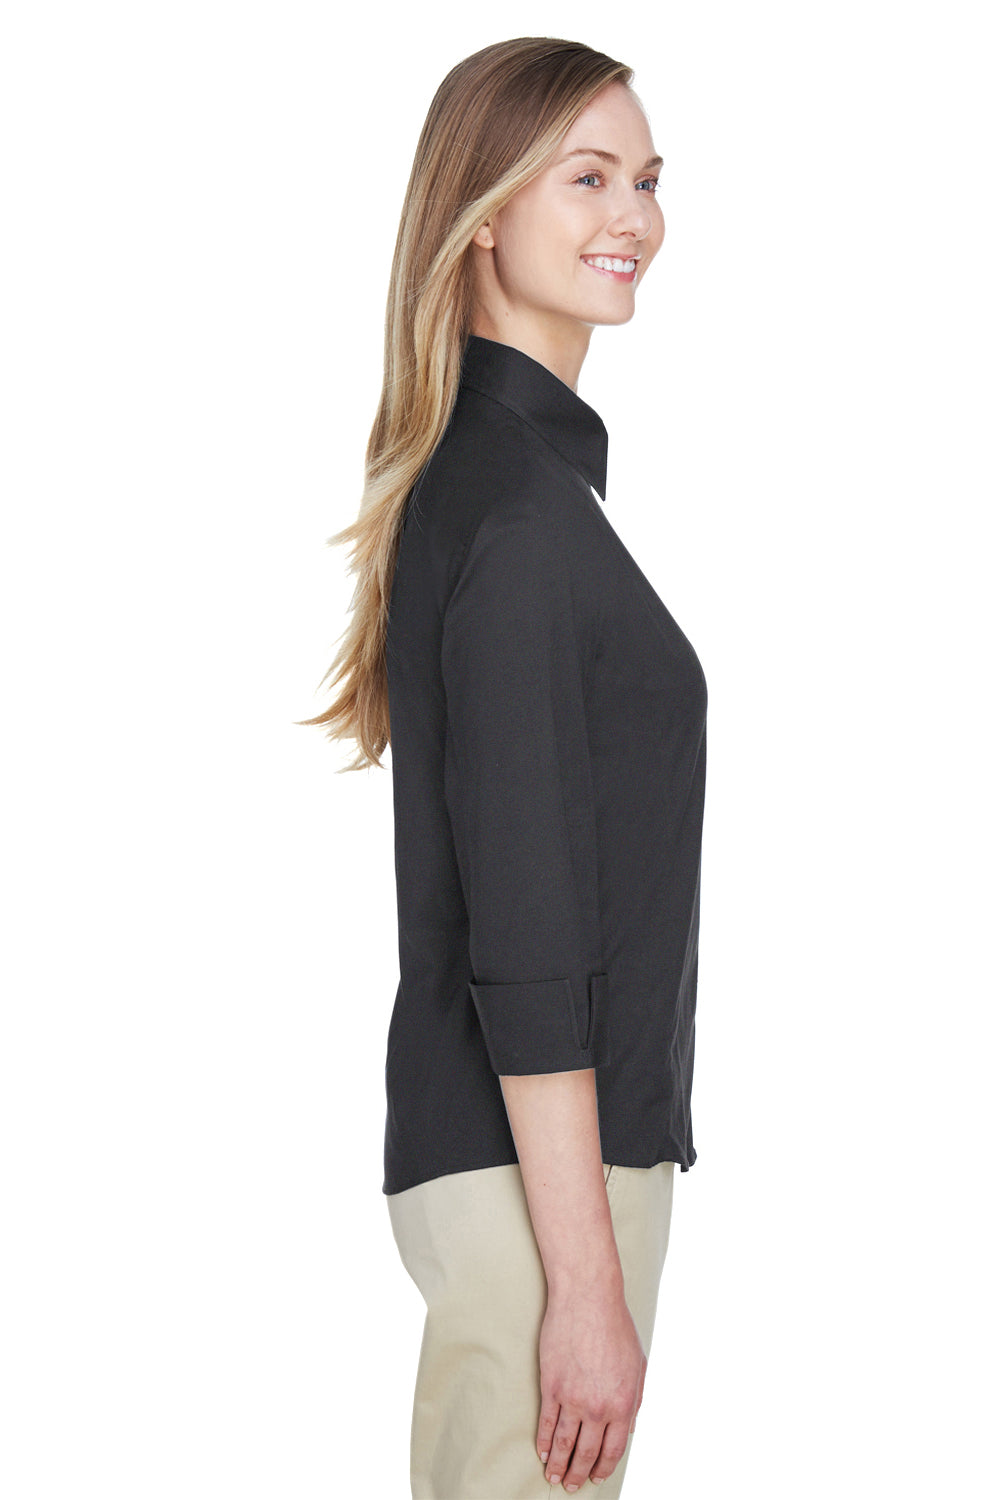 Devon & Jones DP625W Womens Perfect Fit 3/4 Sleeve Button Down Shirt Black Side